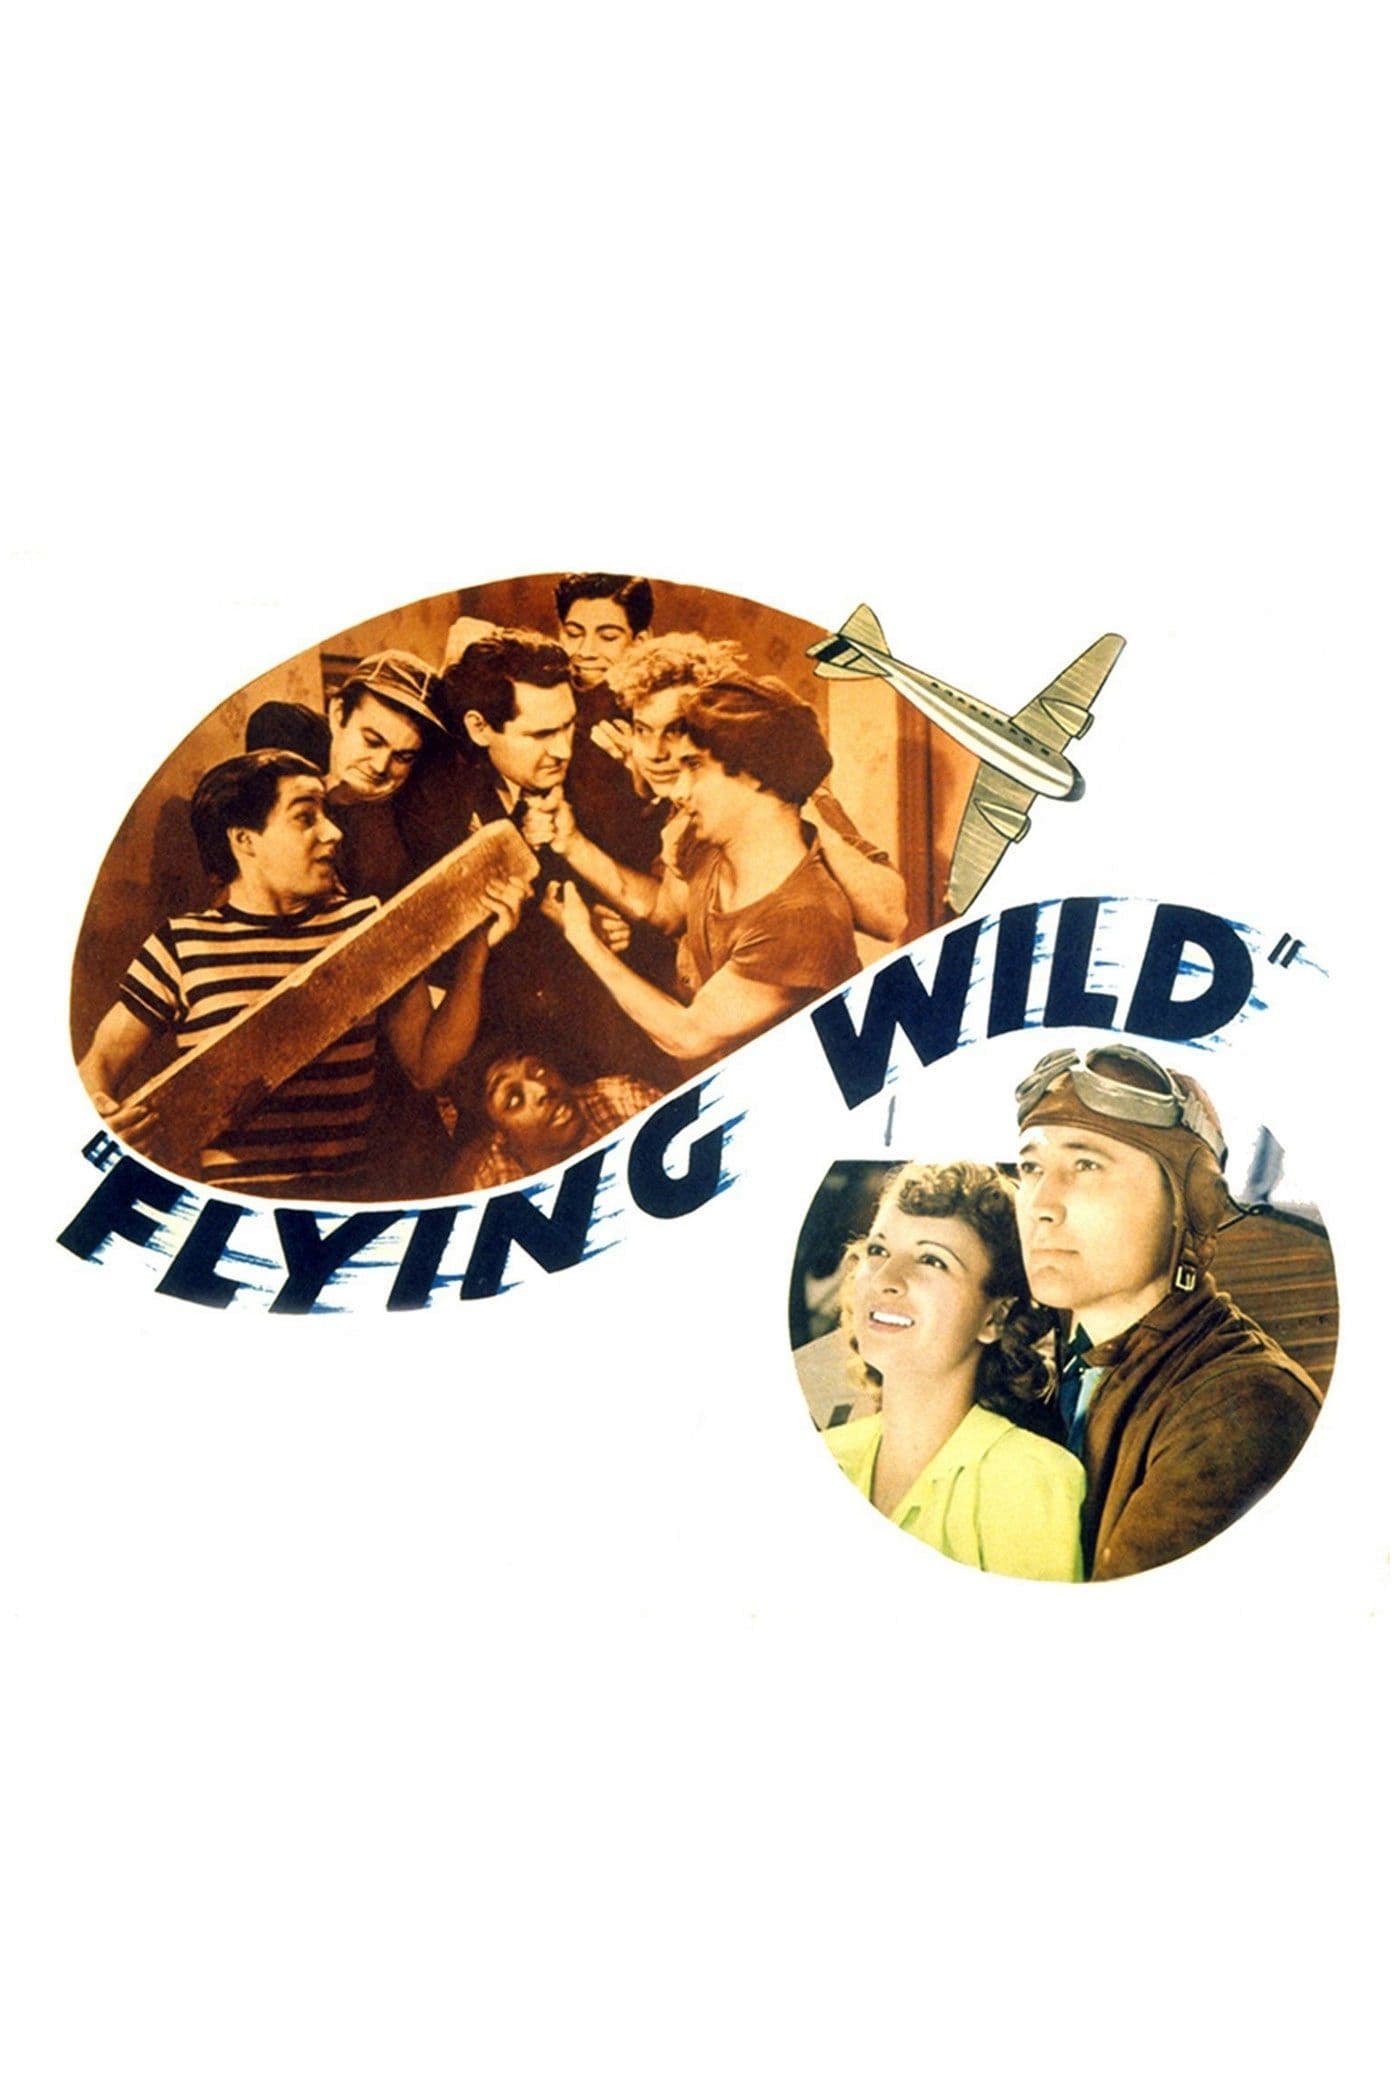 Flying Wild film